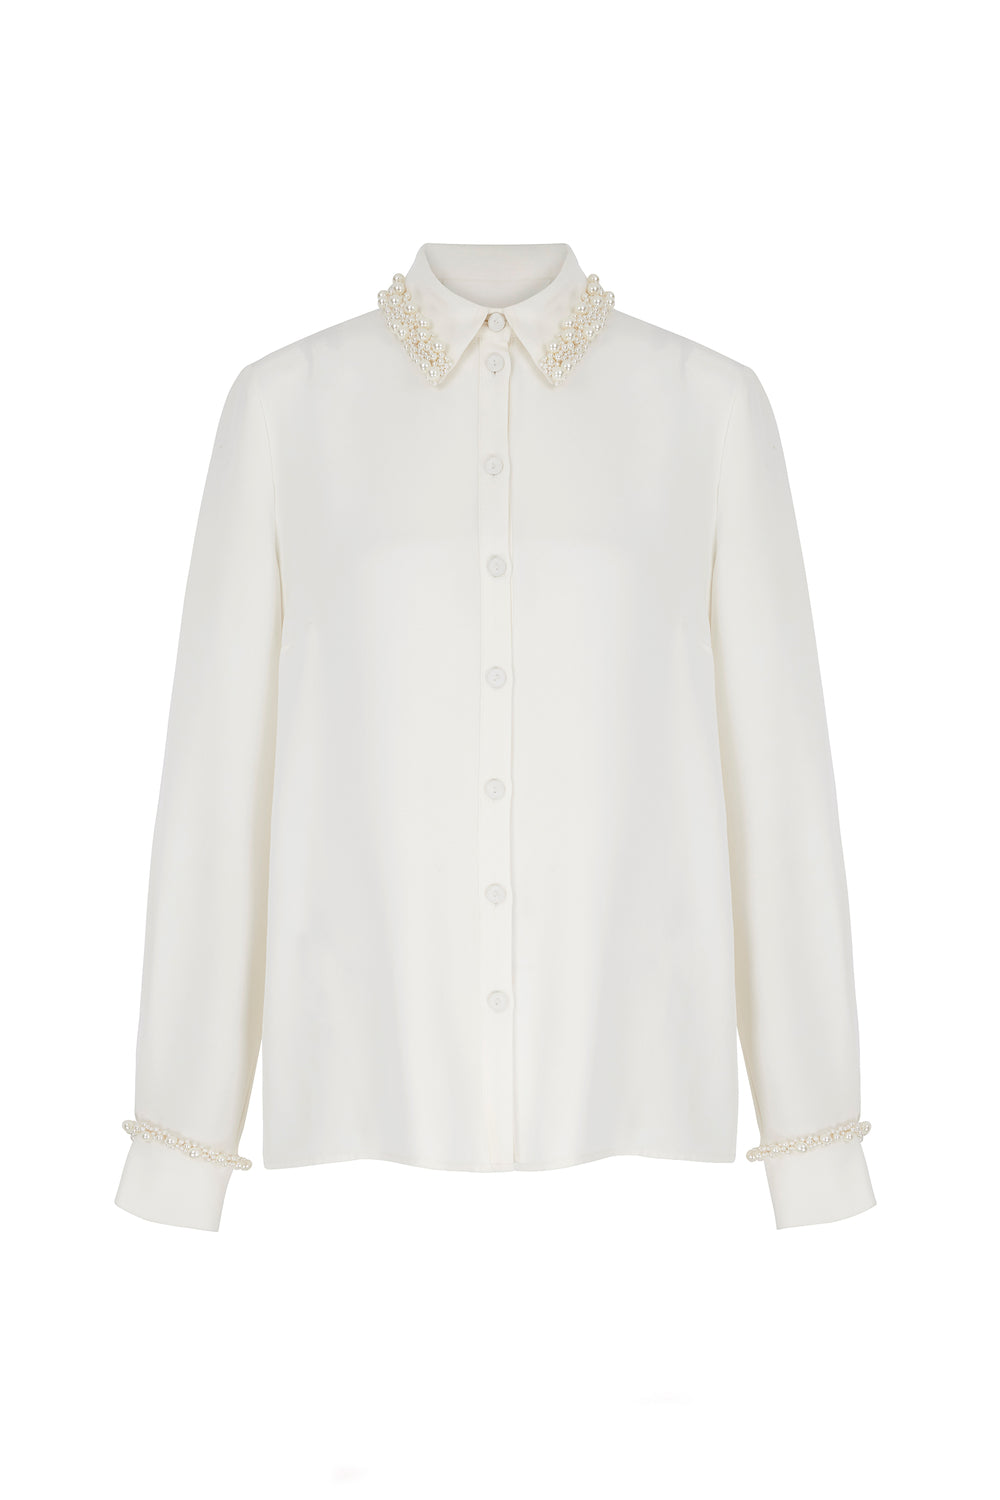 Mayfair | Luxury Silk Shirt Embellished | Suzannah London